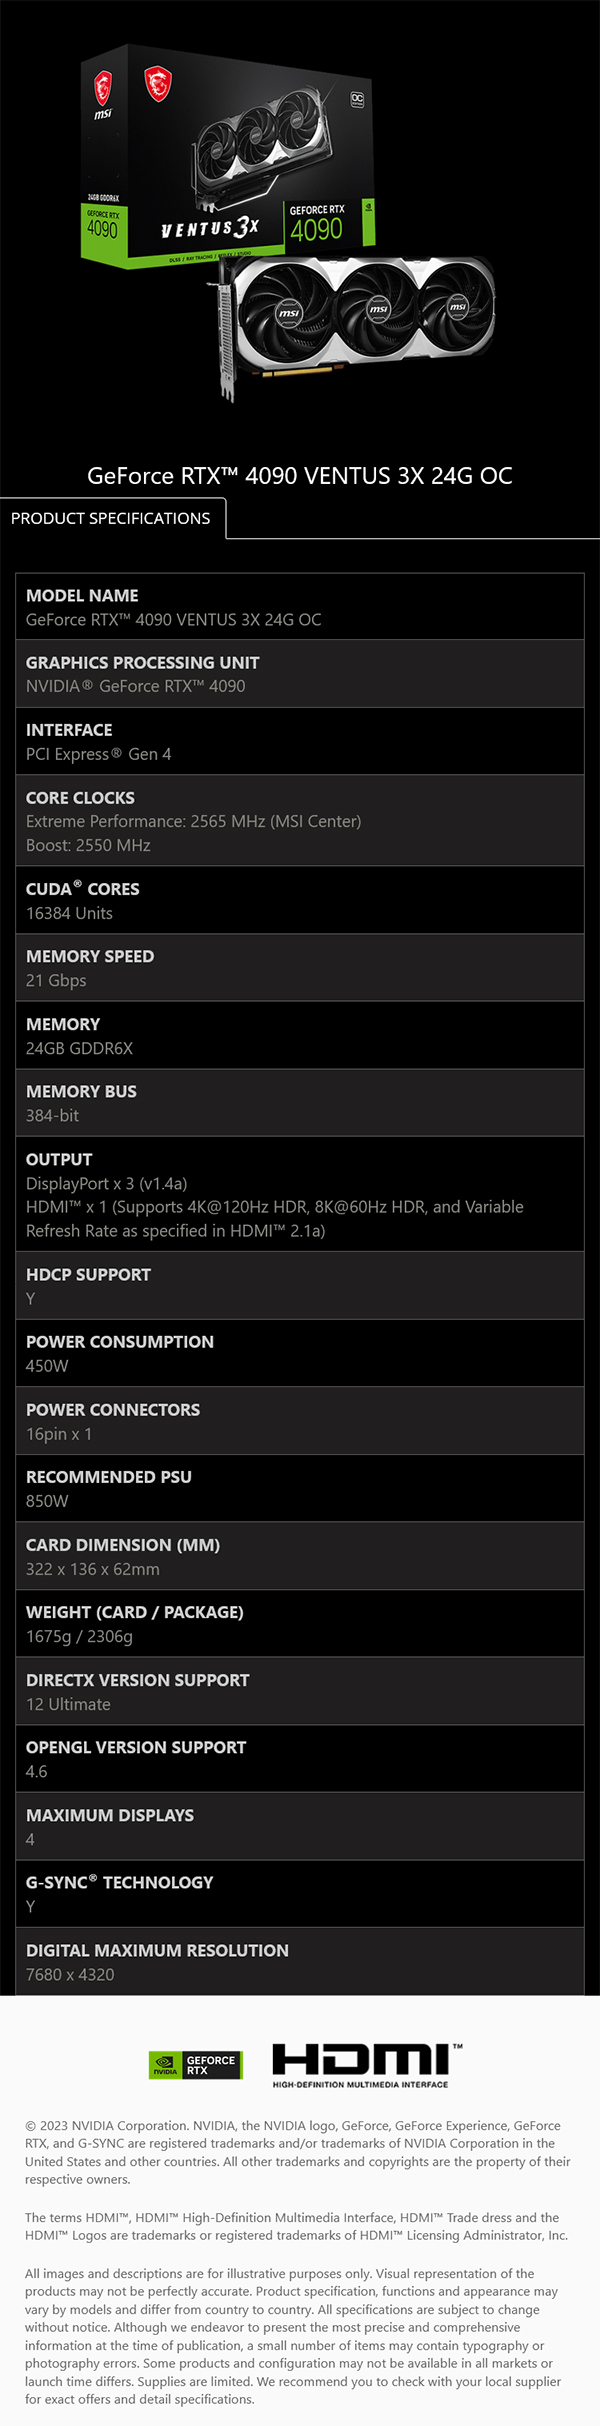 MSI GeForce RTX 4090 Ventus 3X OC 24GB Video Card - Desktop Overview 8